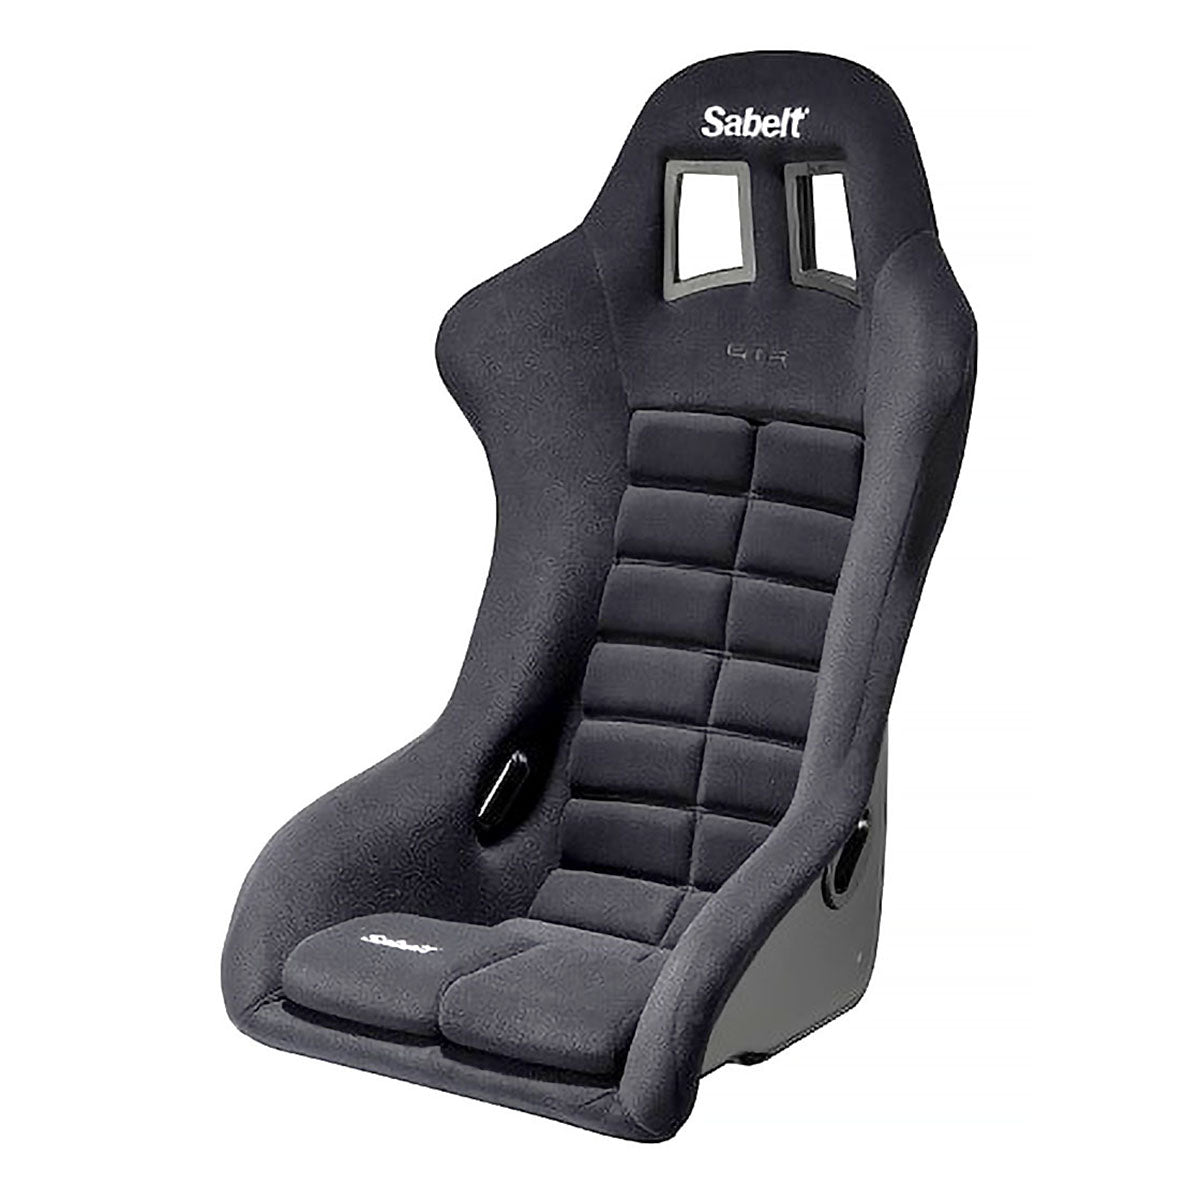 Sabelt GT3 Racing Seat 2028 Expiry